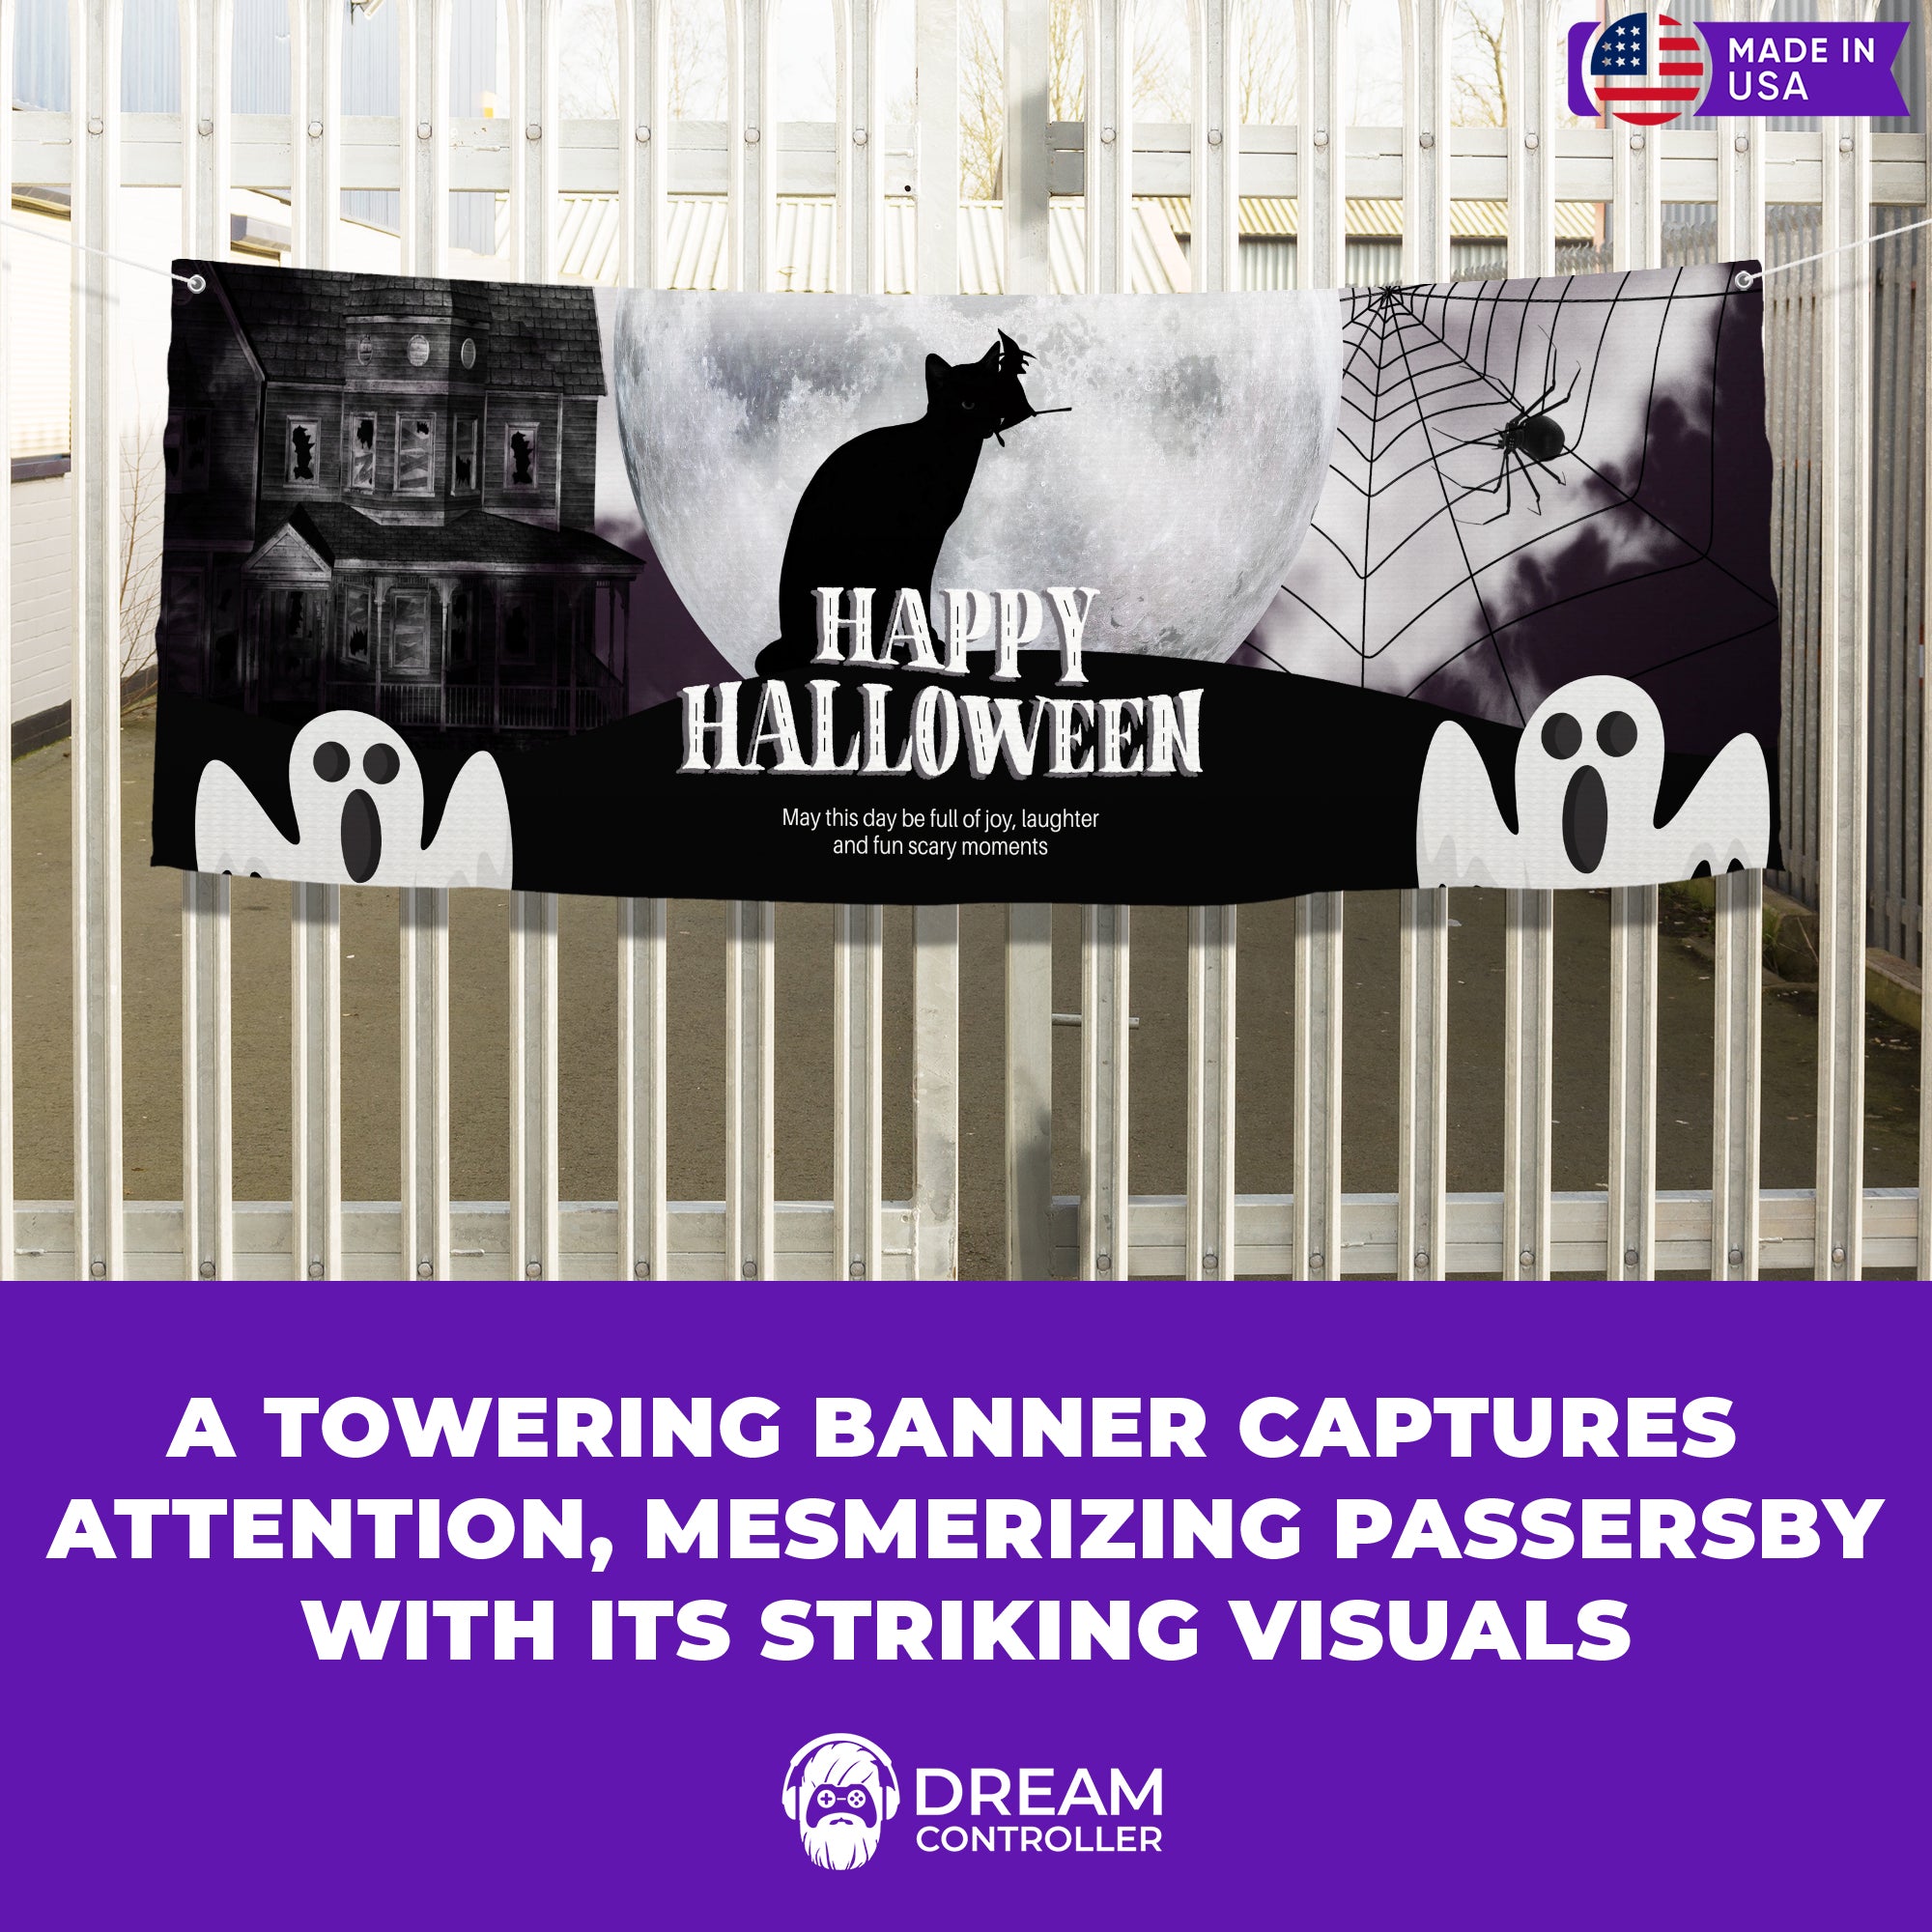 Happy Halloween Cat Moon Banner - Spooktacular Design, Fade-Resistant, Easy Install